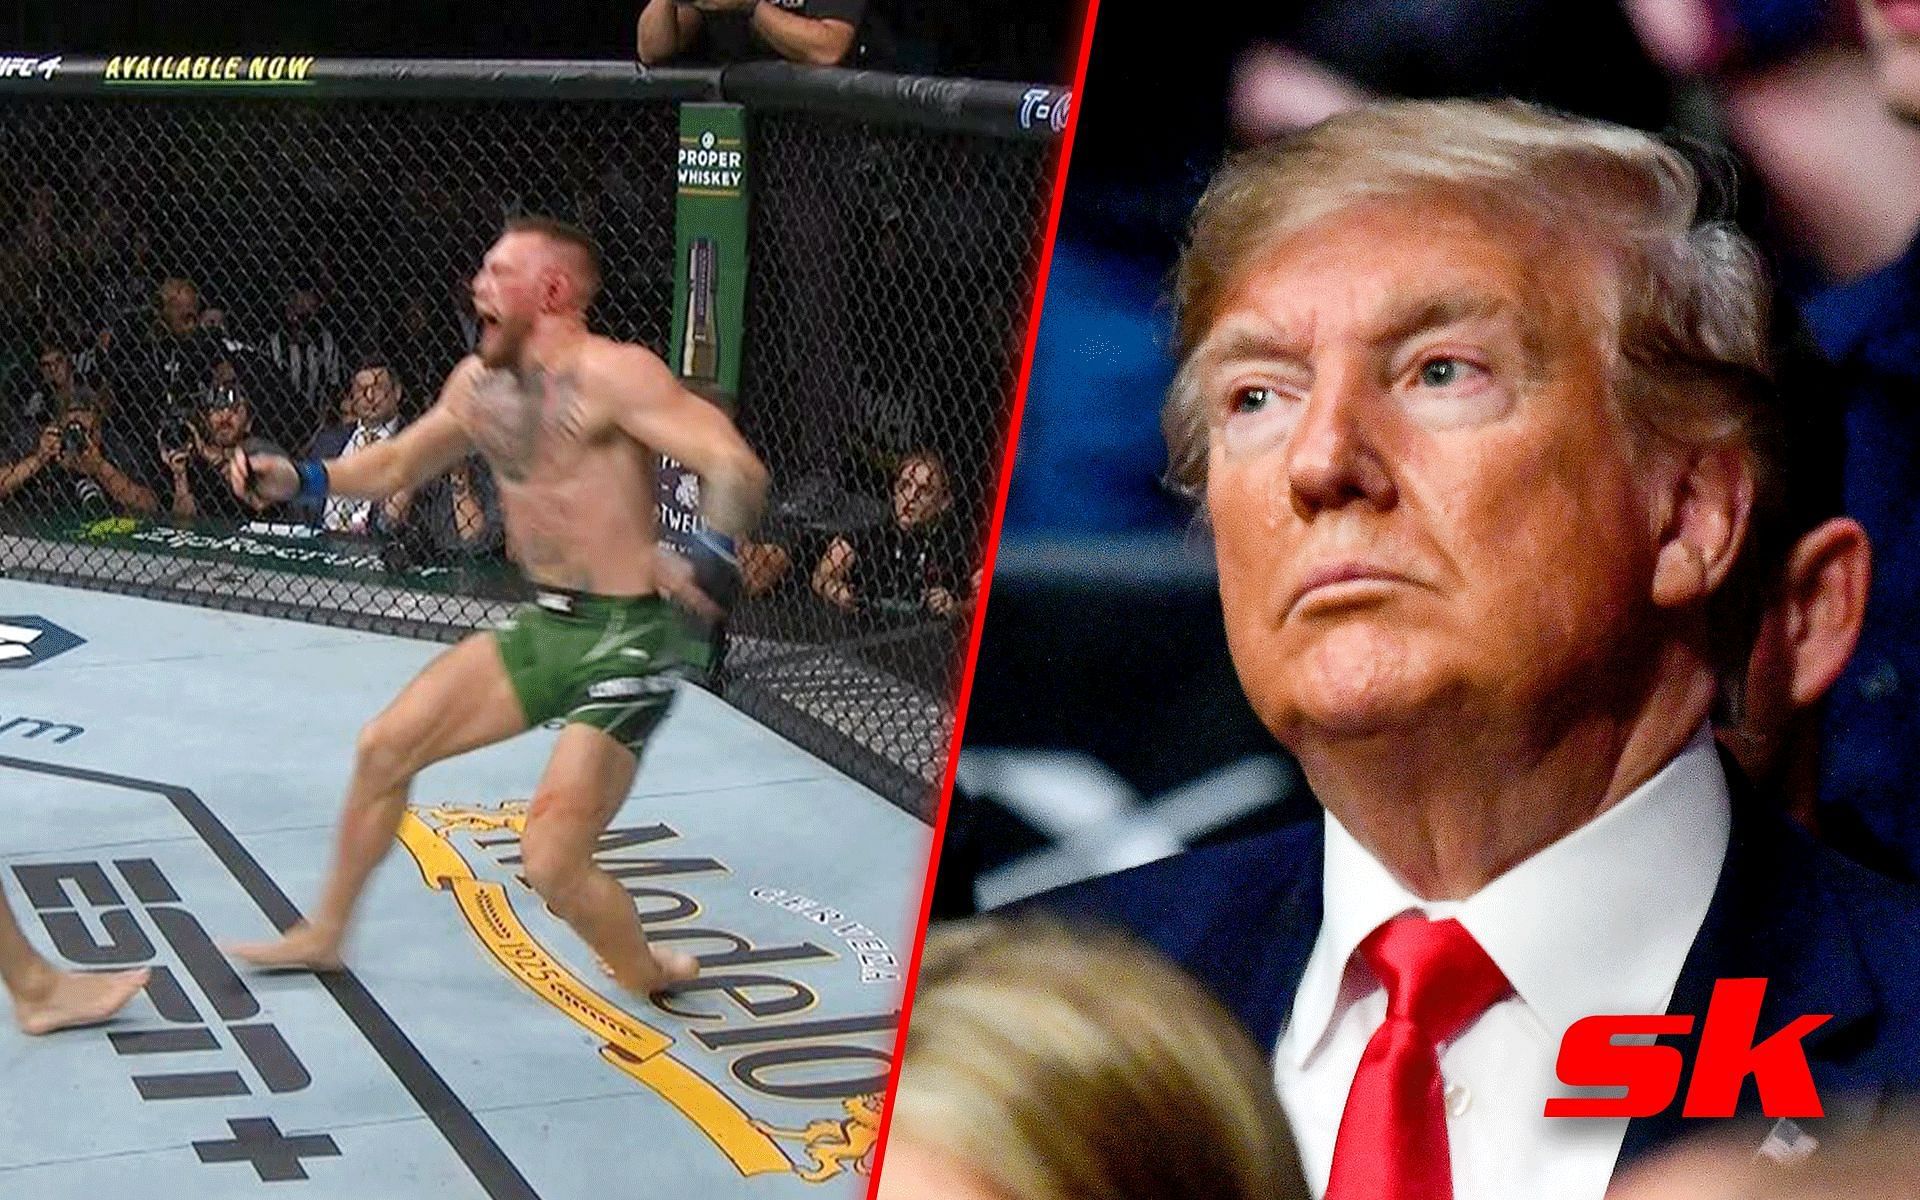 Conor McGregor (left) and Donald Trump (right) [Image Courtesy: Conor McGregor still from UFC 264 via FoxNews.com and Donald Trump via Getty Images]